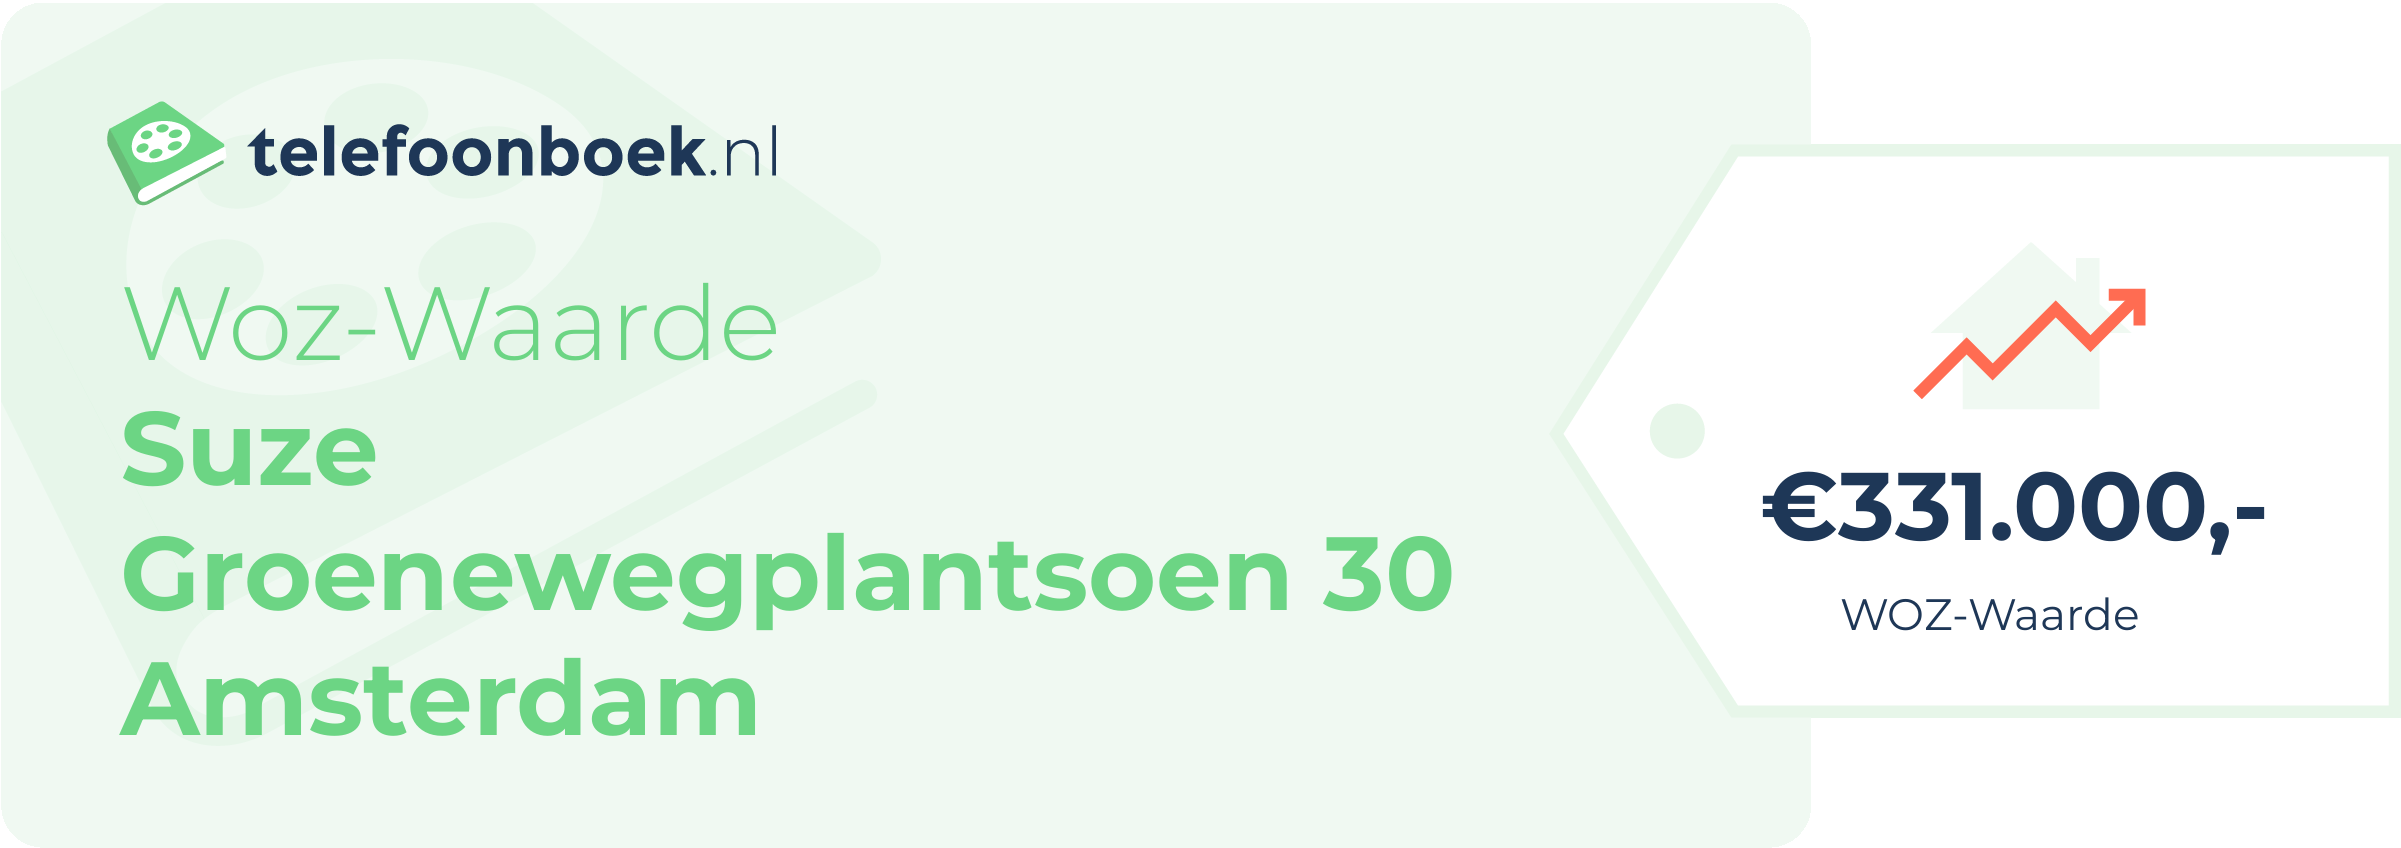 WOZ-waarde Suze Groenewegplantsoen 30 Amsterdam